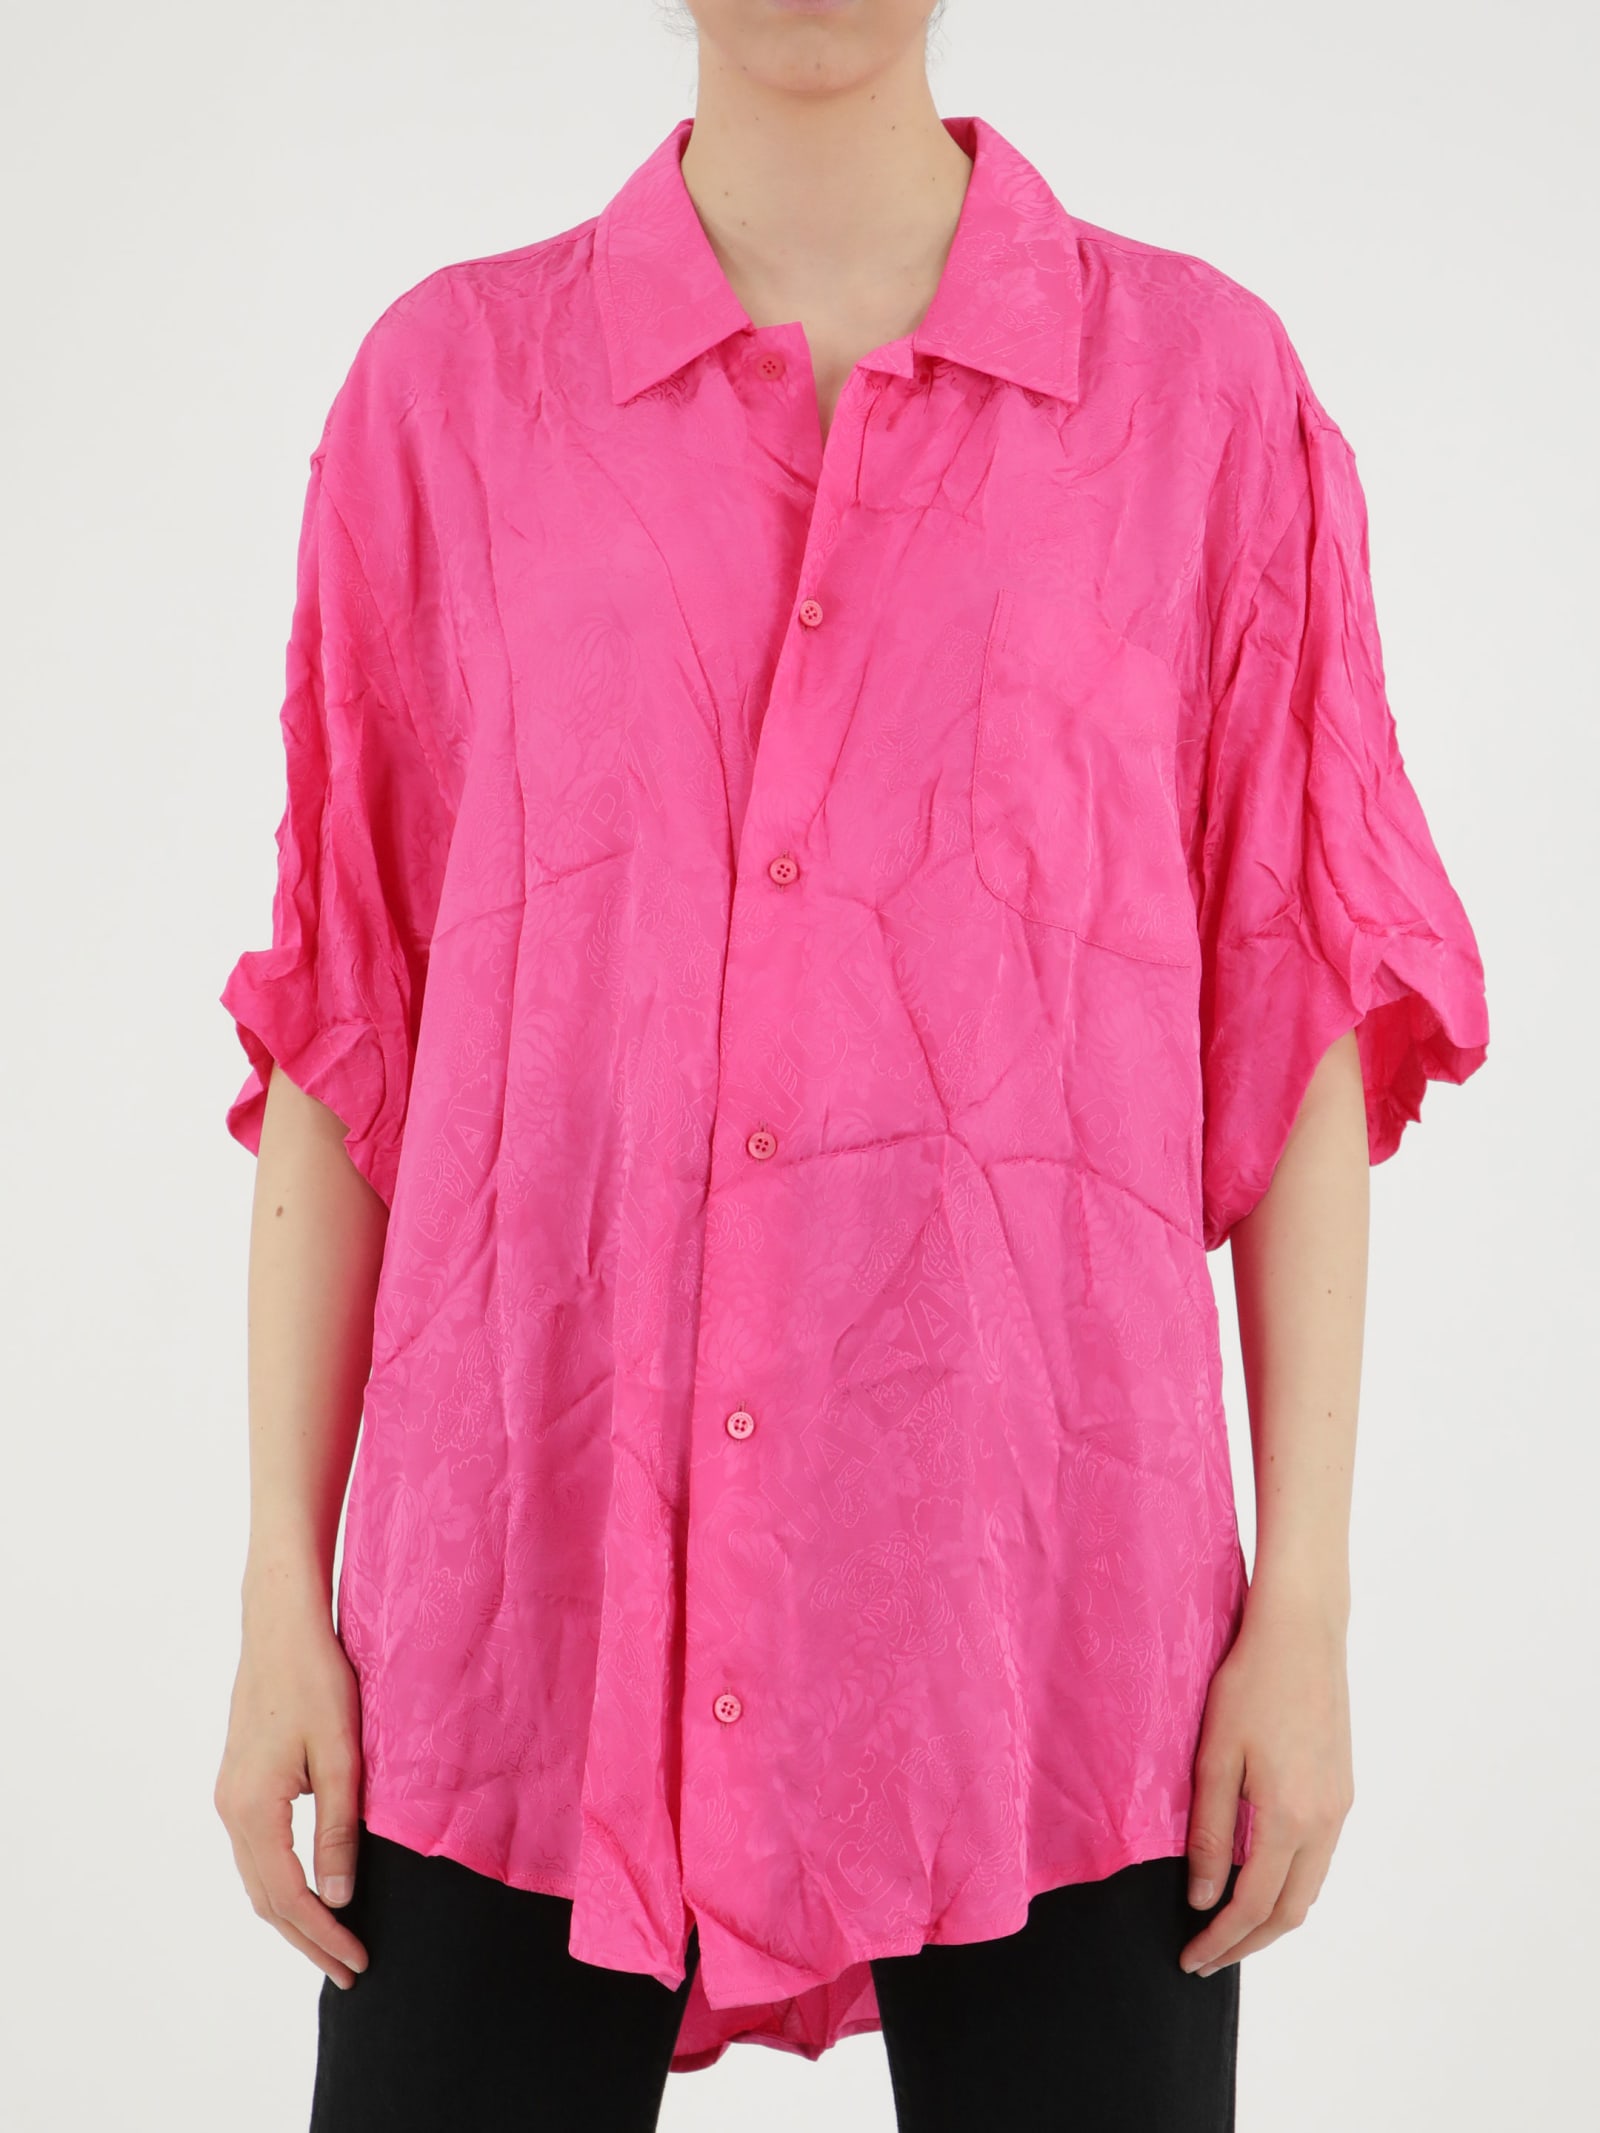 Balenciaga Jacquard Pink Shirt